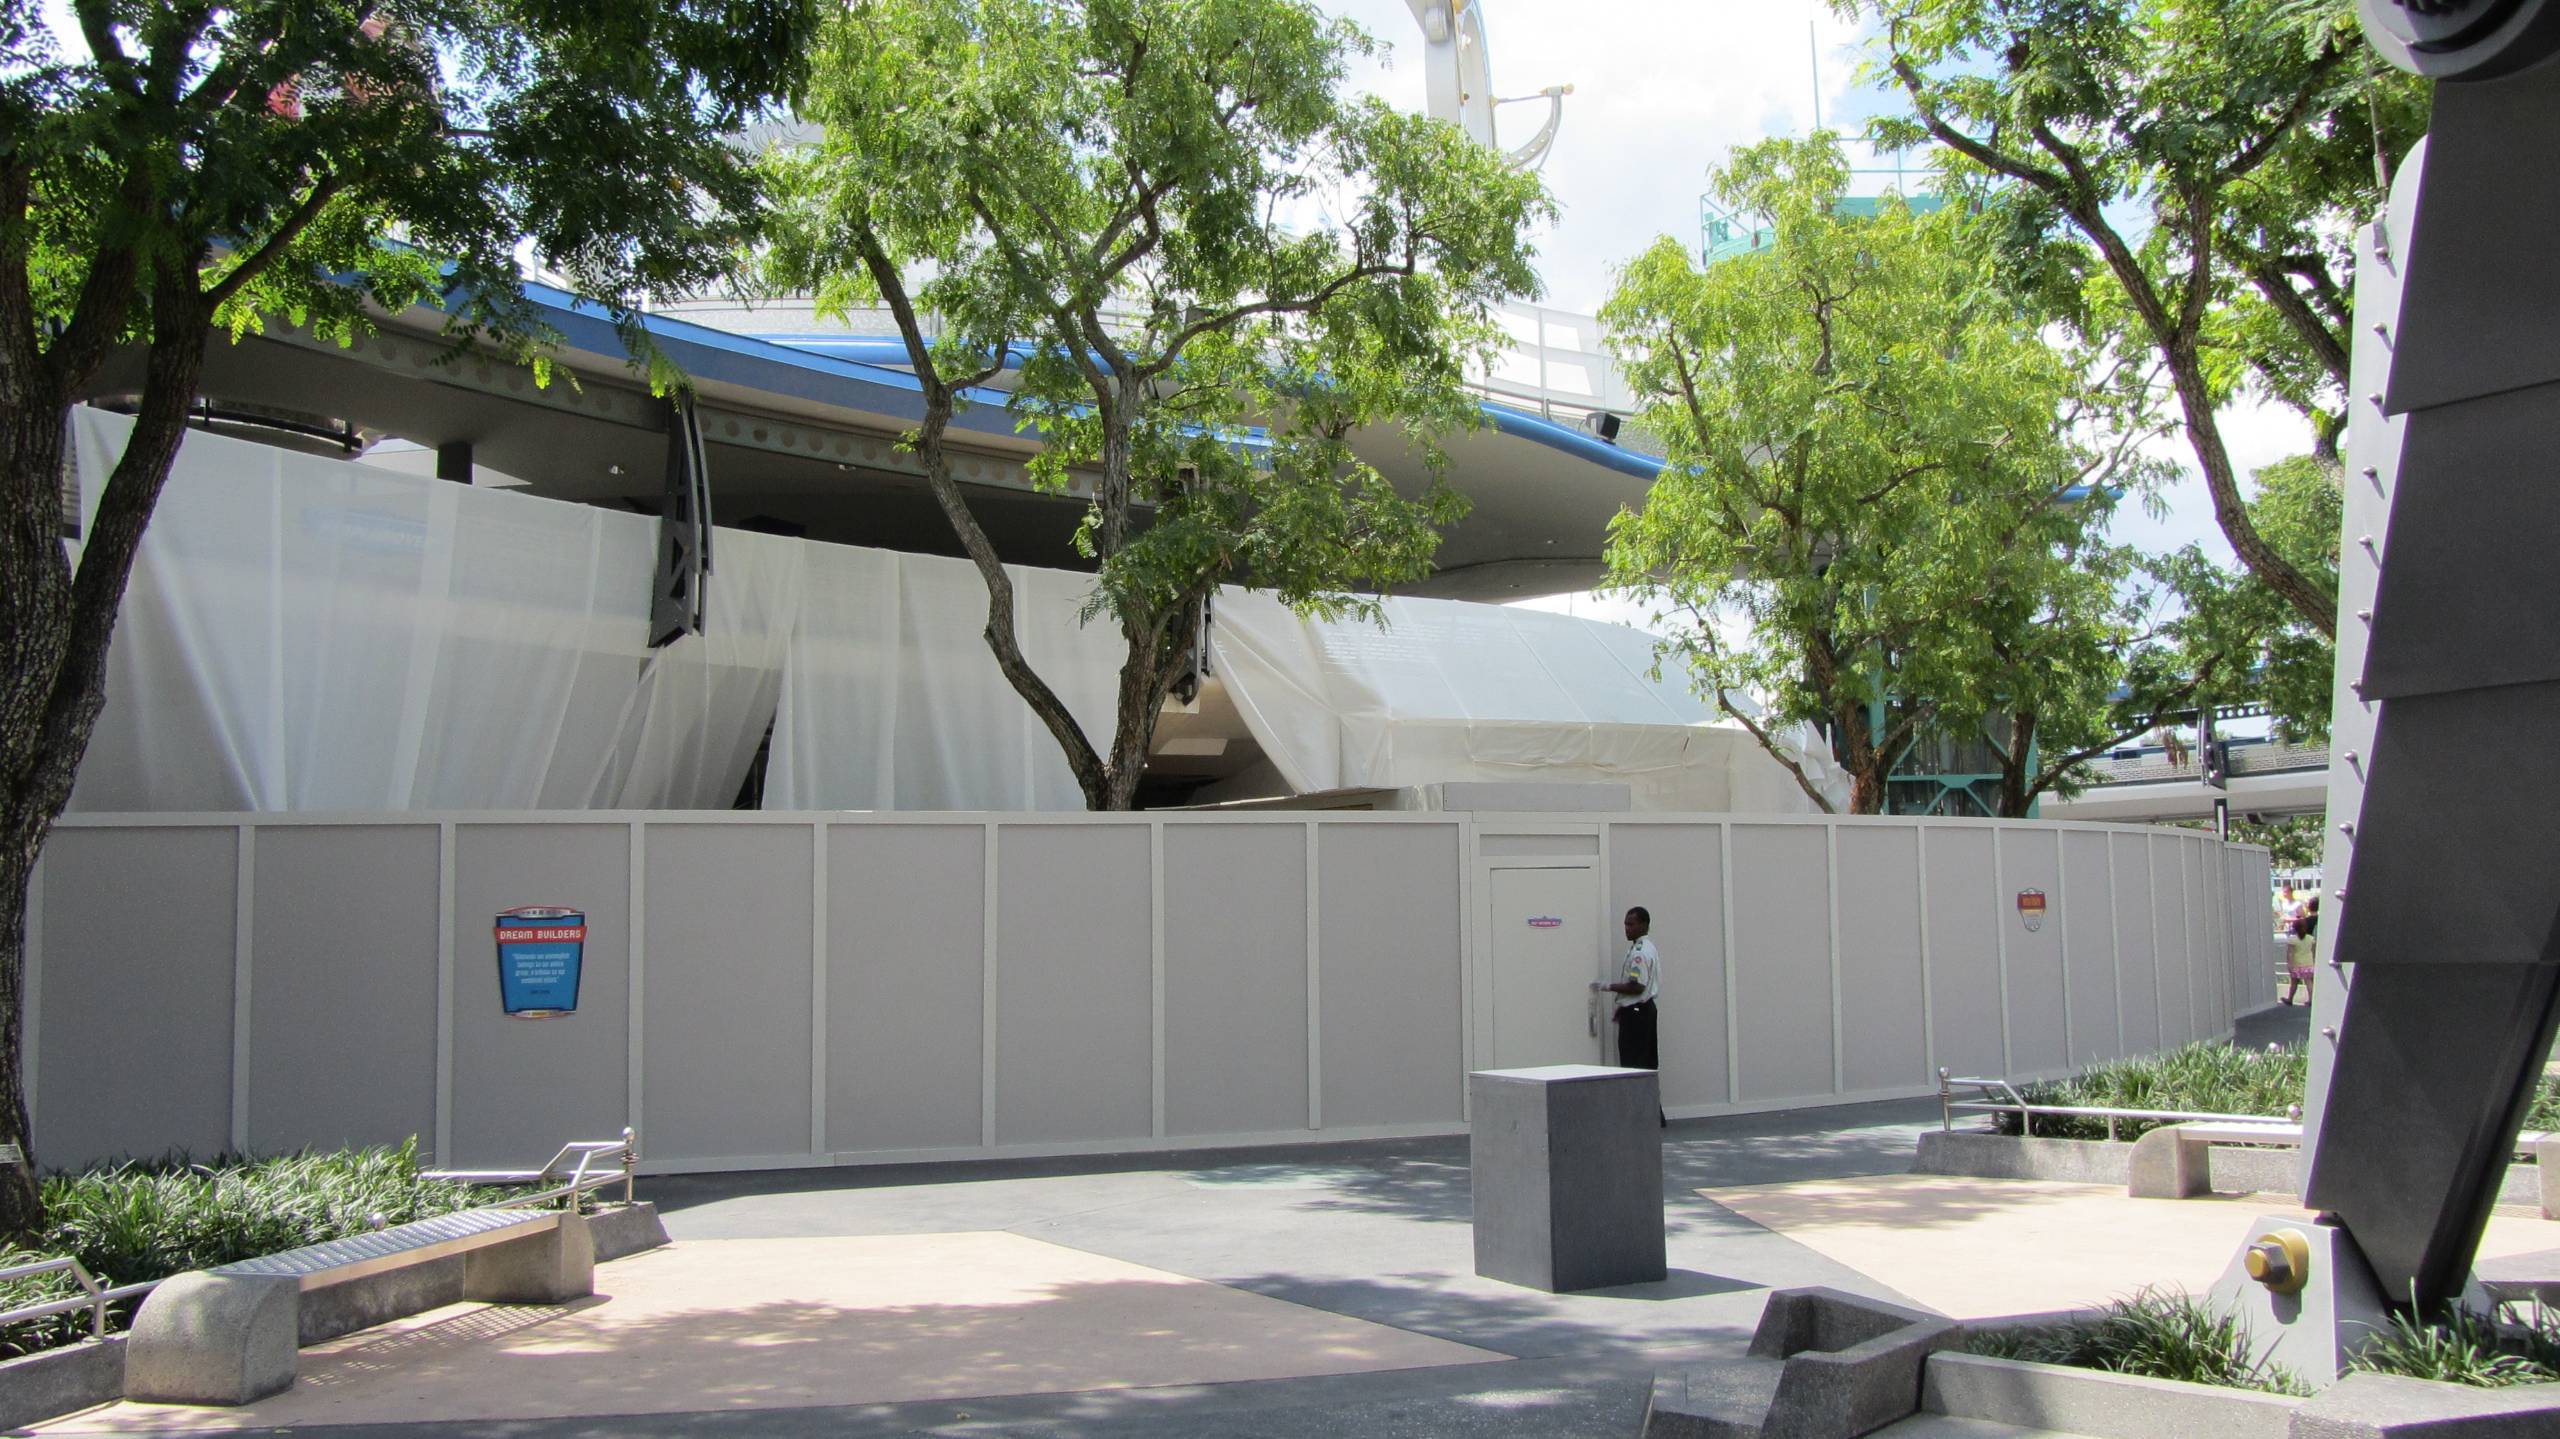 PHOTOS - Tomorrowland Transit Authority PeopleMover refurbishment update